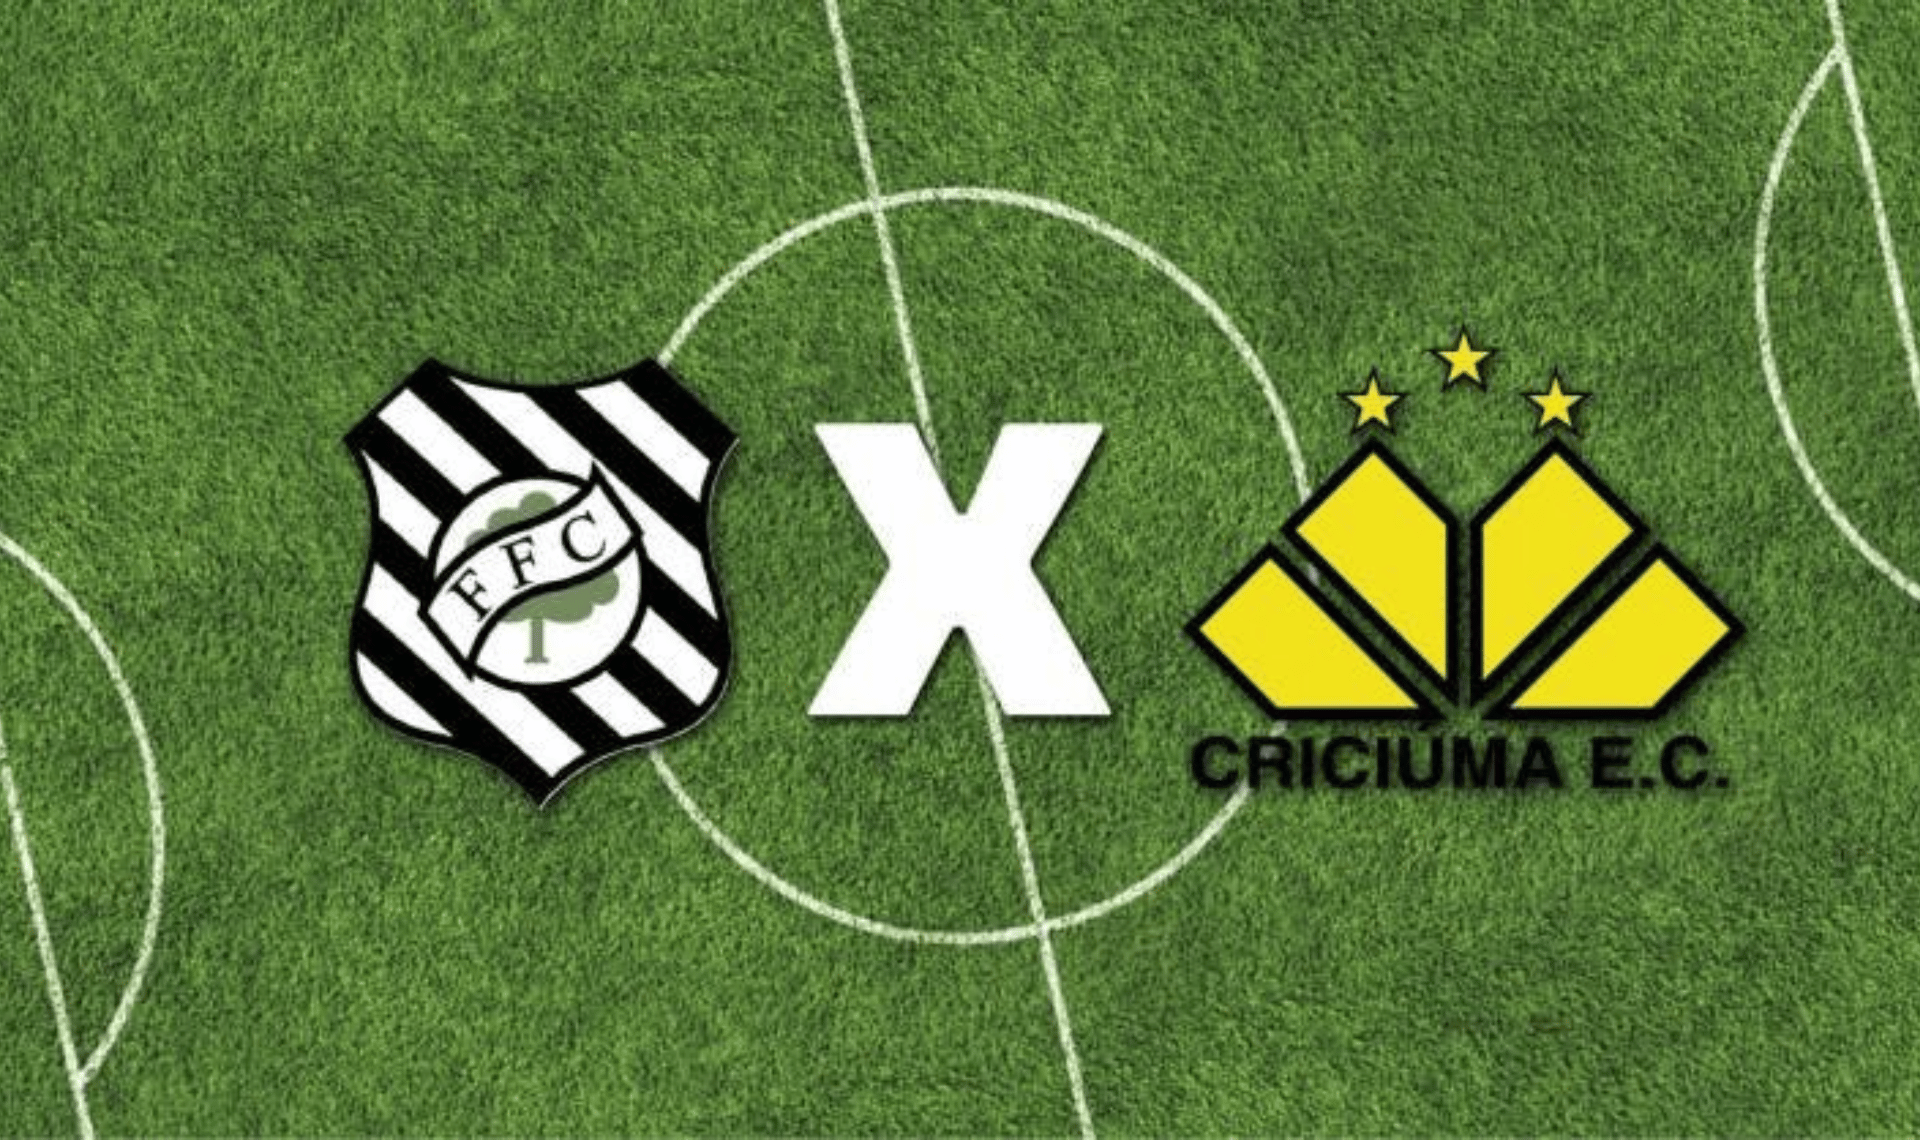 Figueirense versus Criciúma